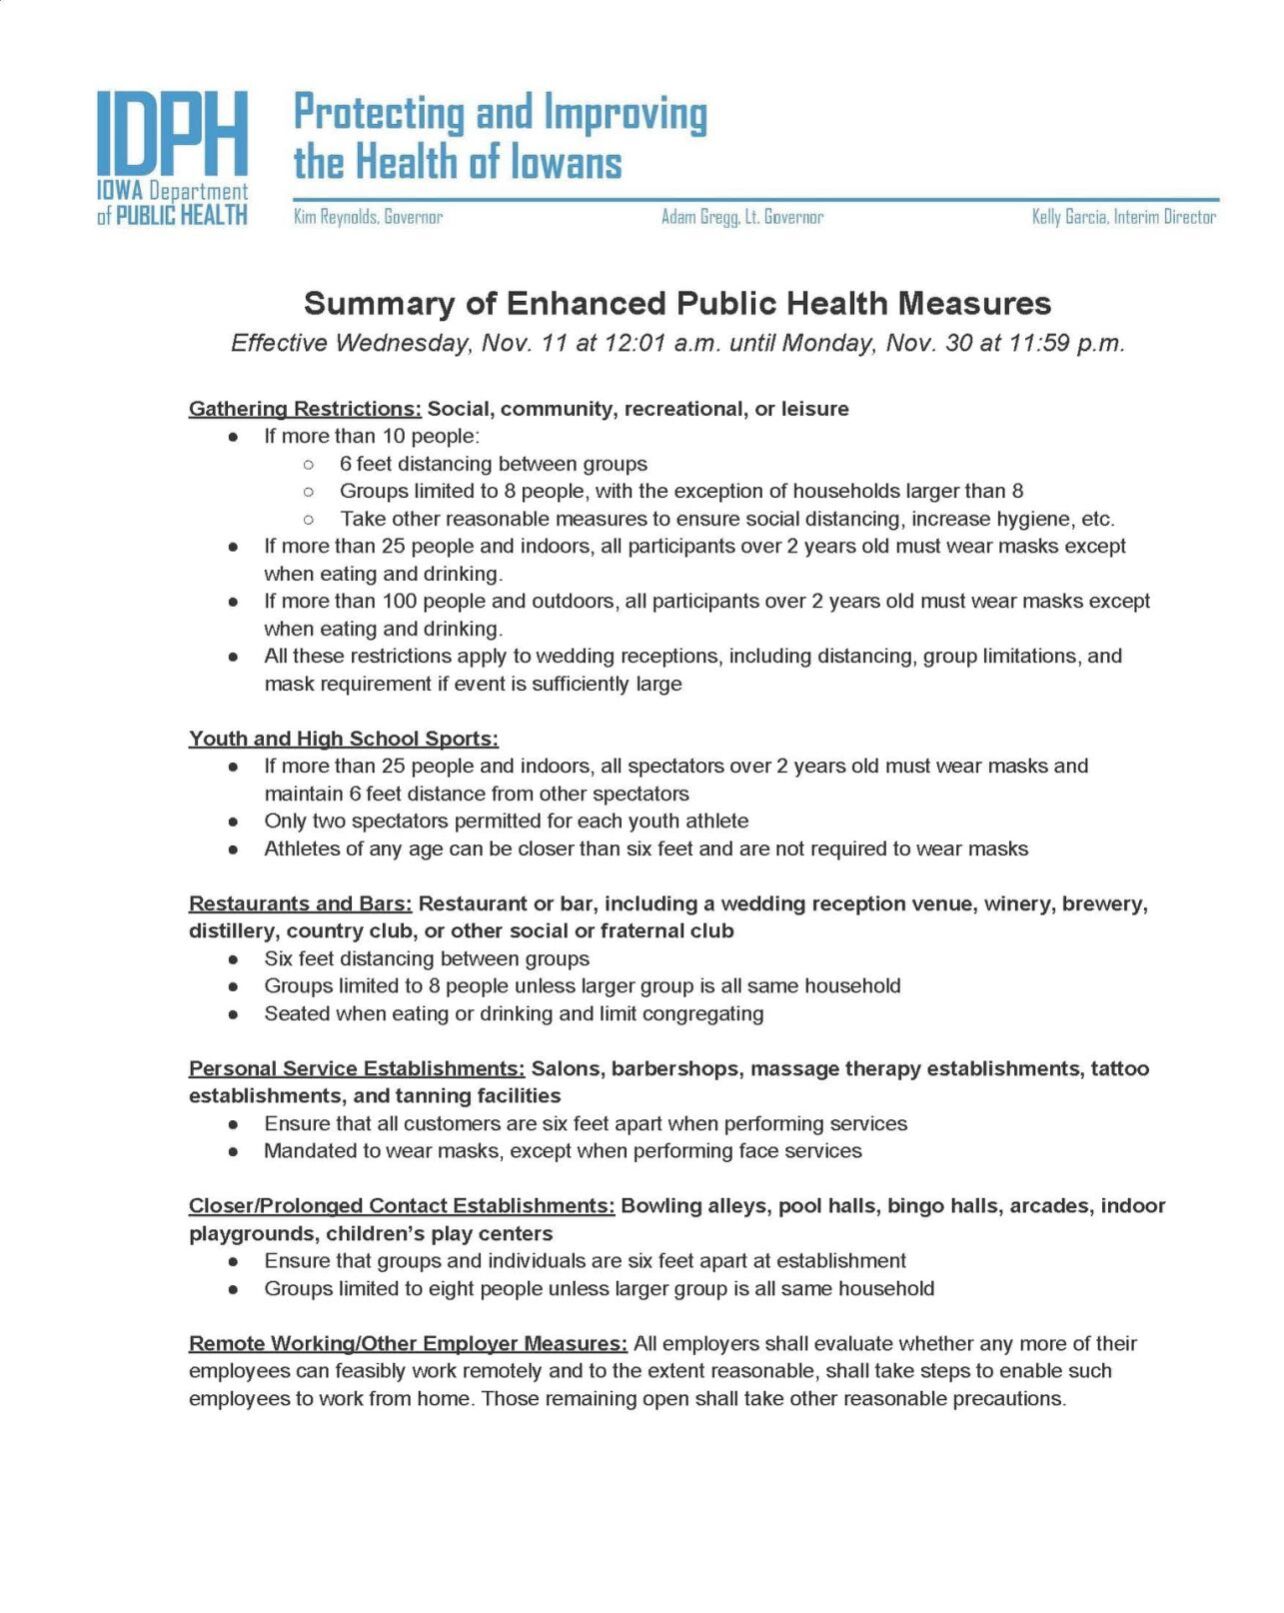 New COVID-19-related measures, per Iowa Department of Public Health.  PHOTO CREDIT: Iowa Department of Public Health